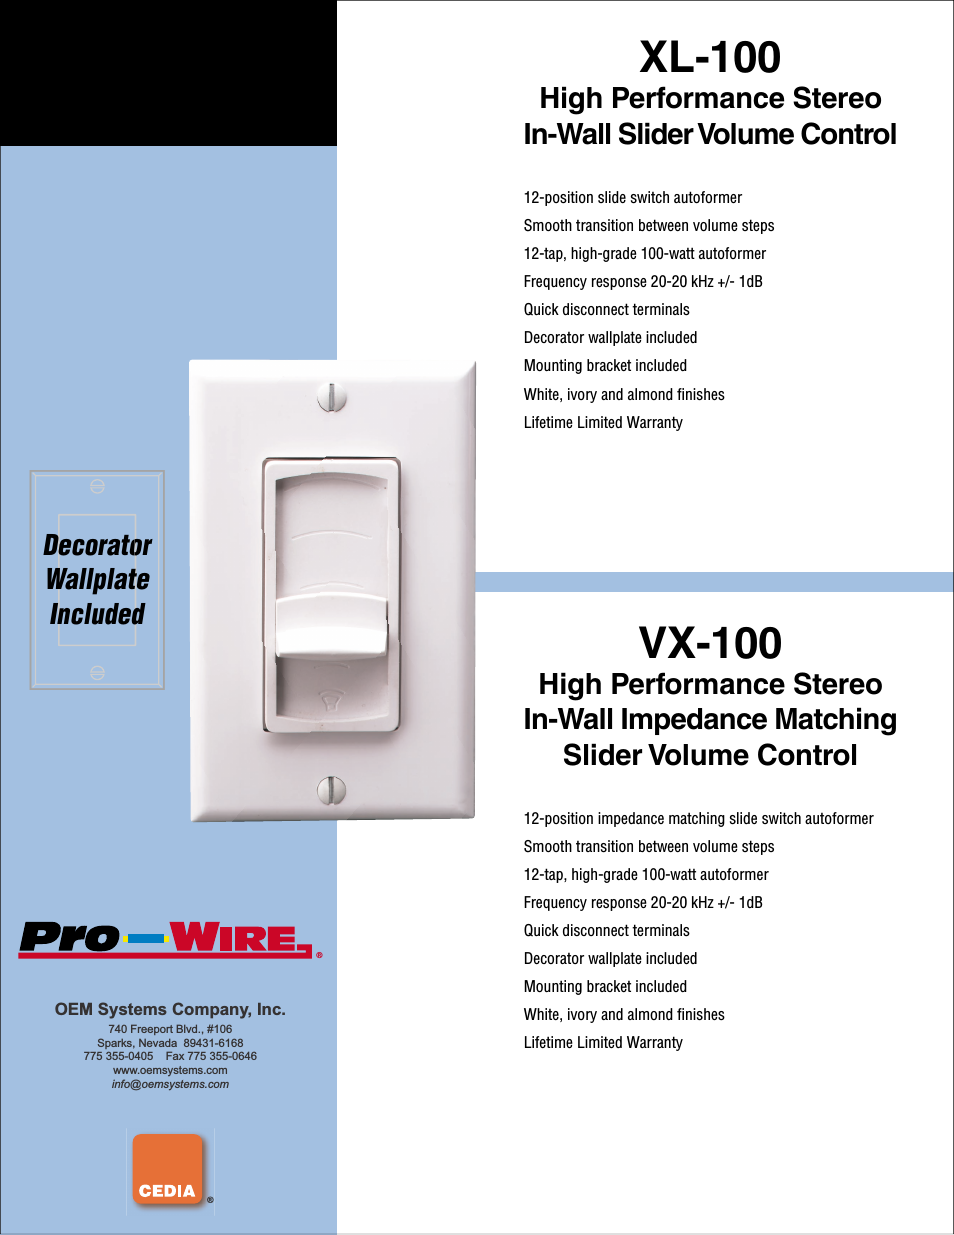 In-Wall SliderVolume Control XL-100